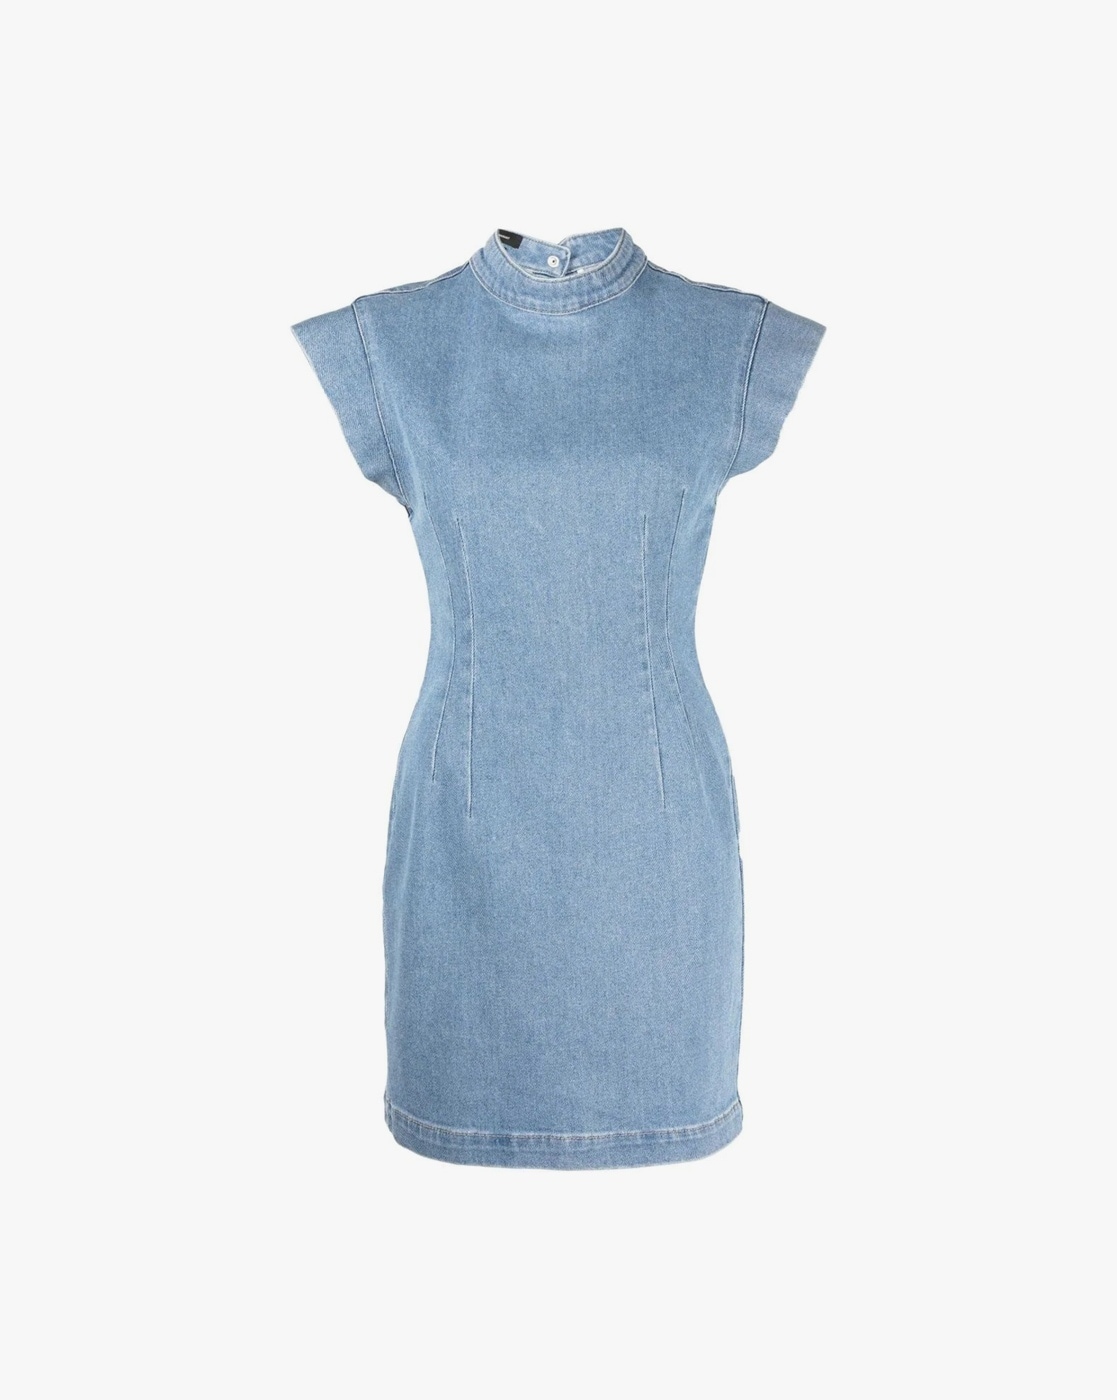 Amazon.com: Women's Button Down Dress Summer Sleeveless Square Neck Slit Denim  Dress Casual Stretchy Bodycon Midi Tank Dresses Blue : Sports & Outdoors